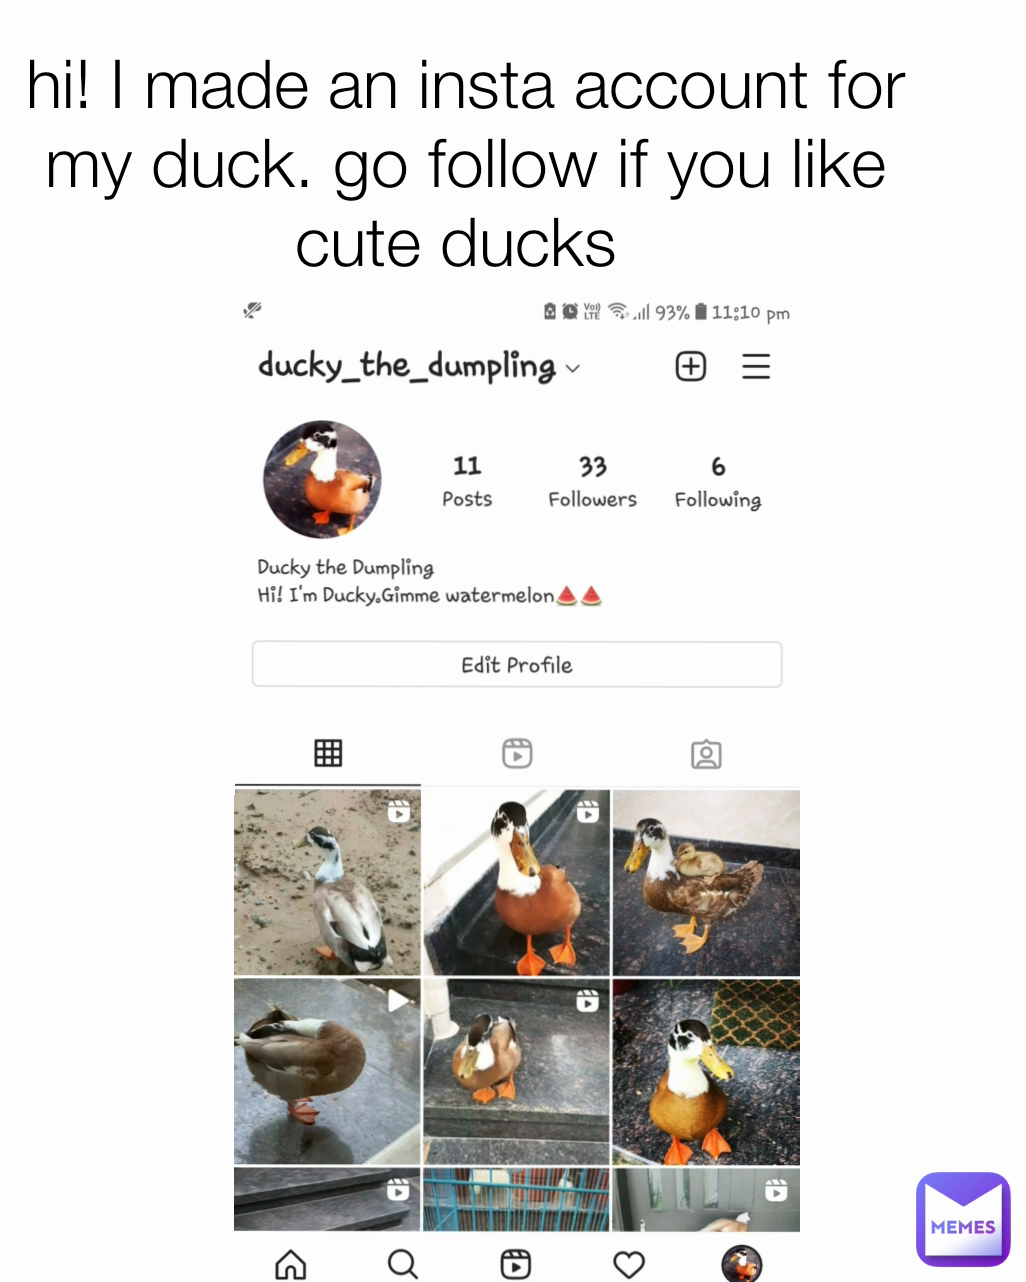 hi! I made an insta account for my duck. go follow if you like cute ducks 